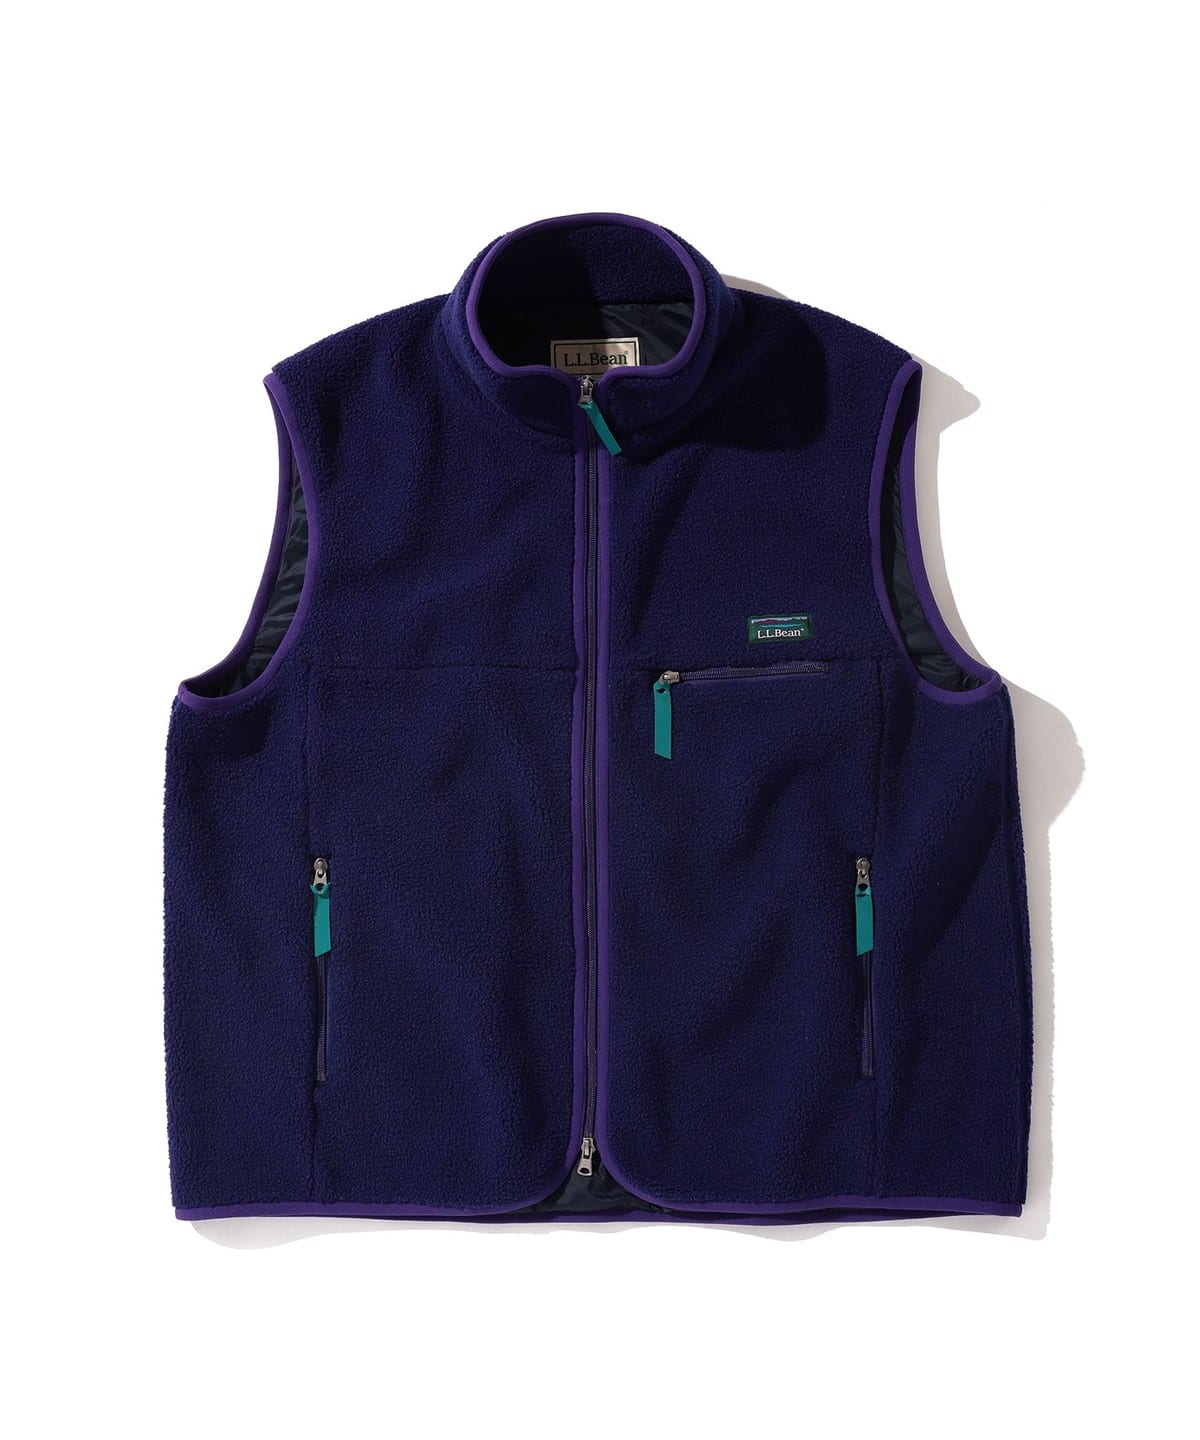 NEEDLES × BEAMS / 別注 Boa Fleece Vest即購入大歓迎です